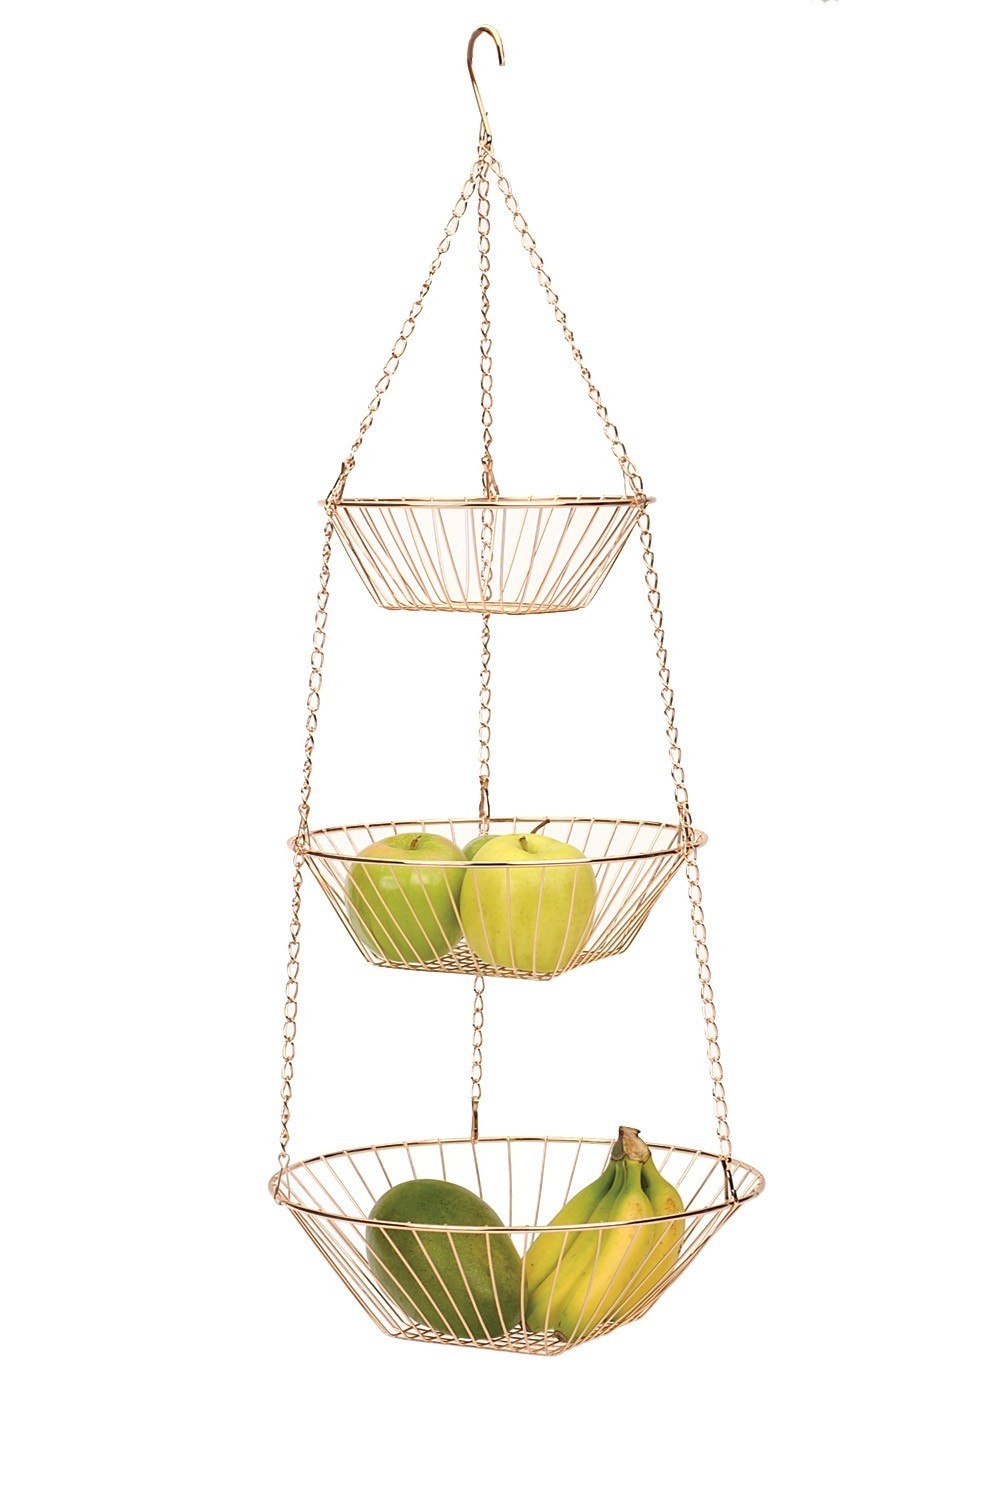 Copper 3 tier hanging wire metal basket fruit vegetable kitchen